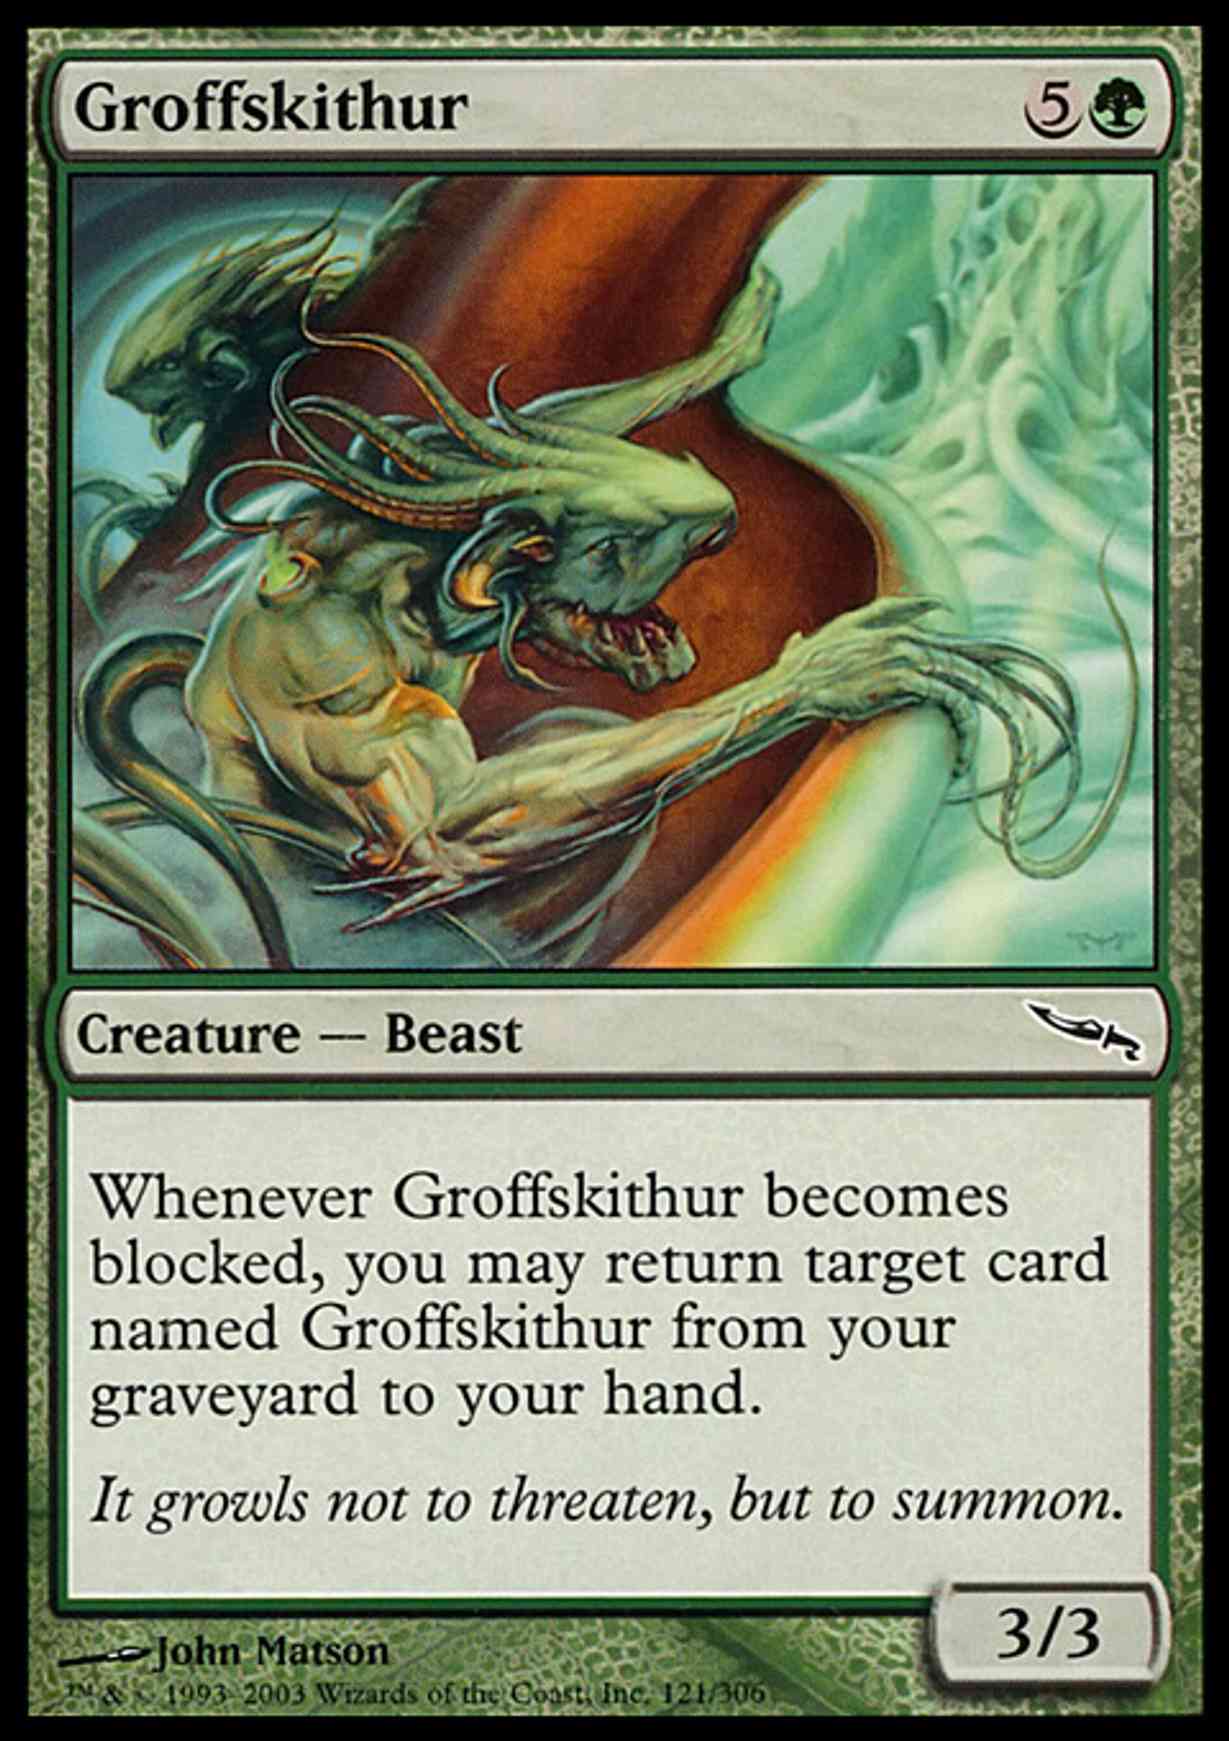 Groffskithur magic card front